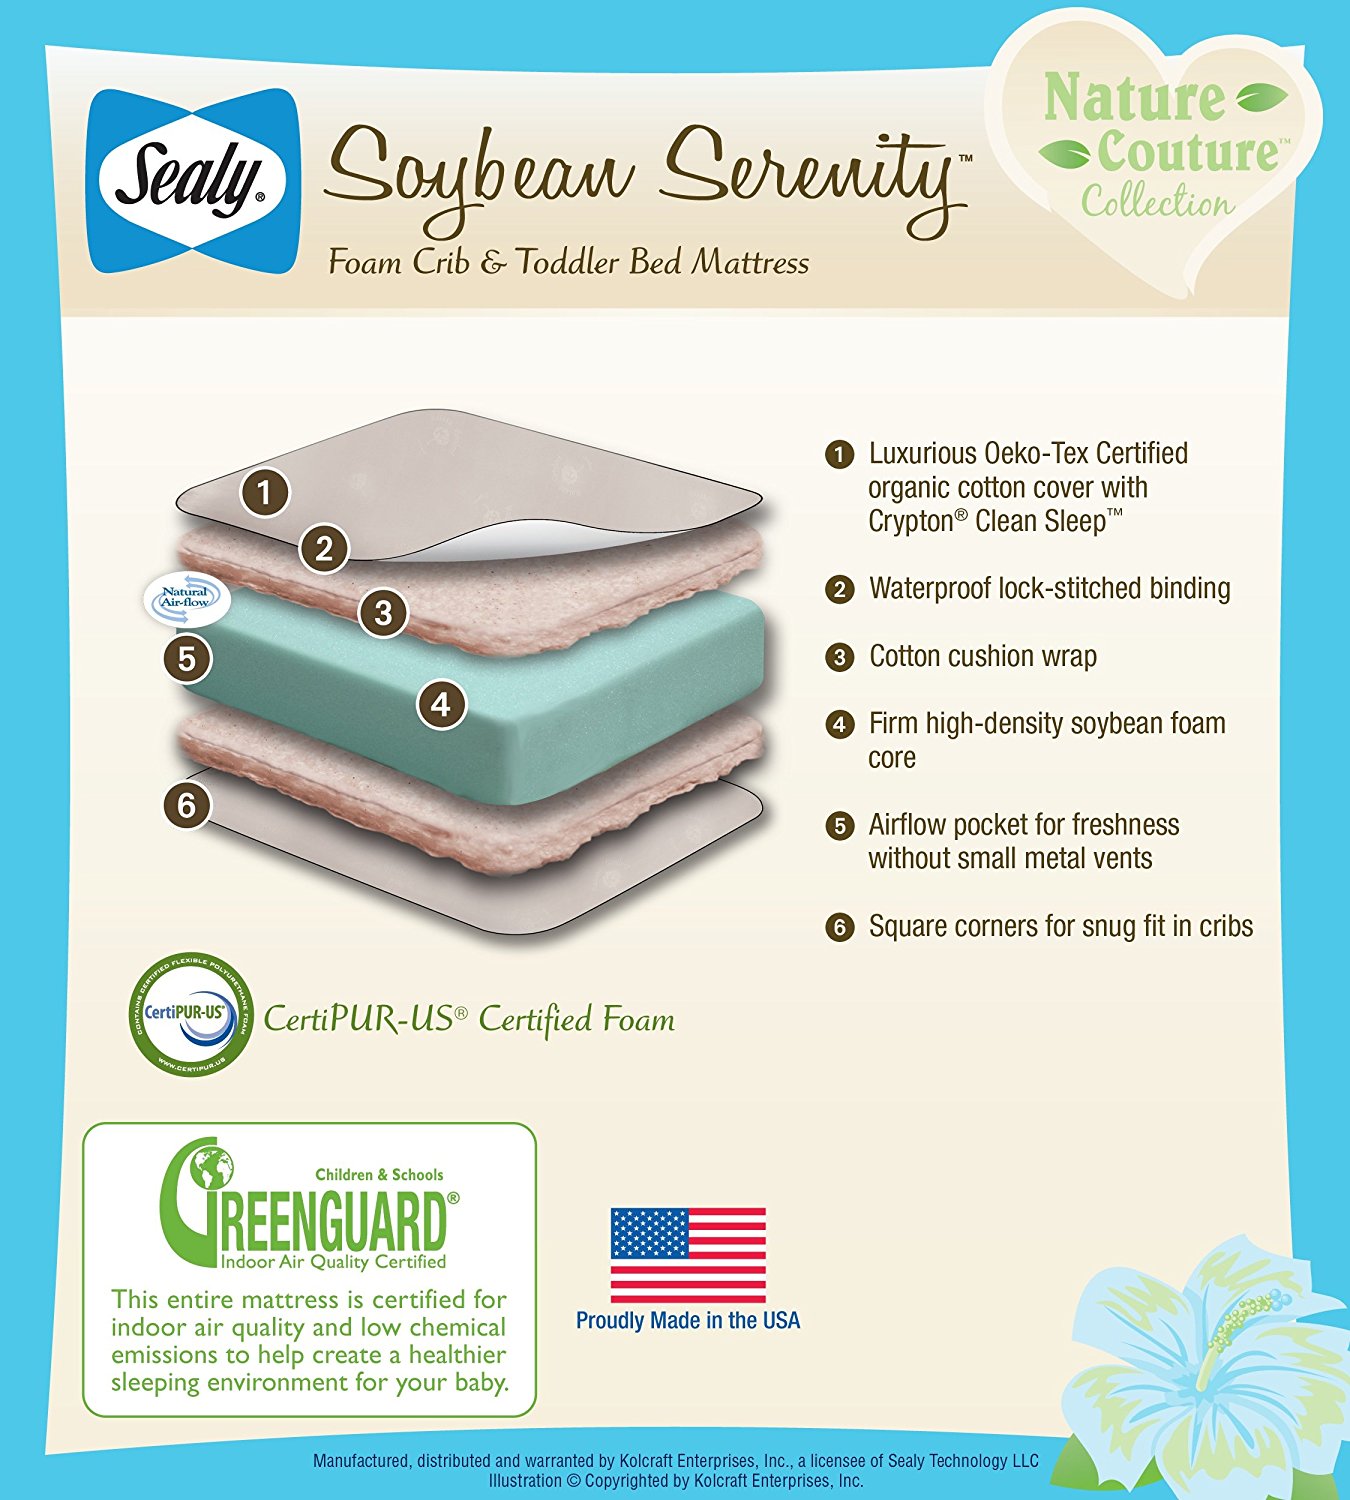 Best Crib Mattress Sealy Soybean Serenity Foam-Core Infant Toddler Crib Mattress